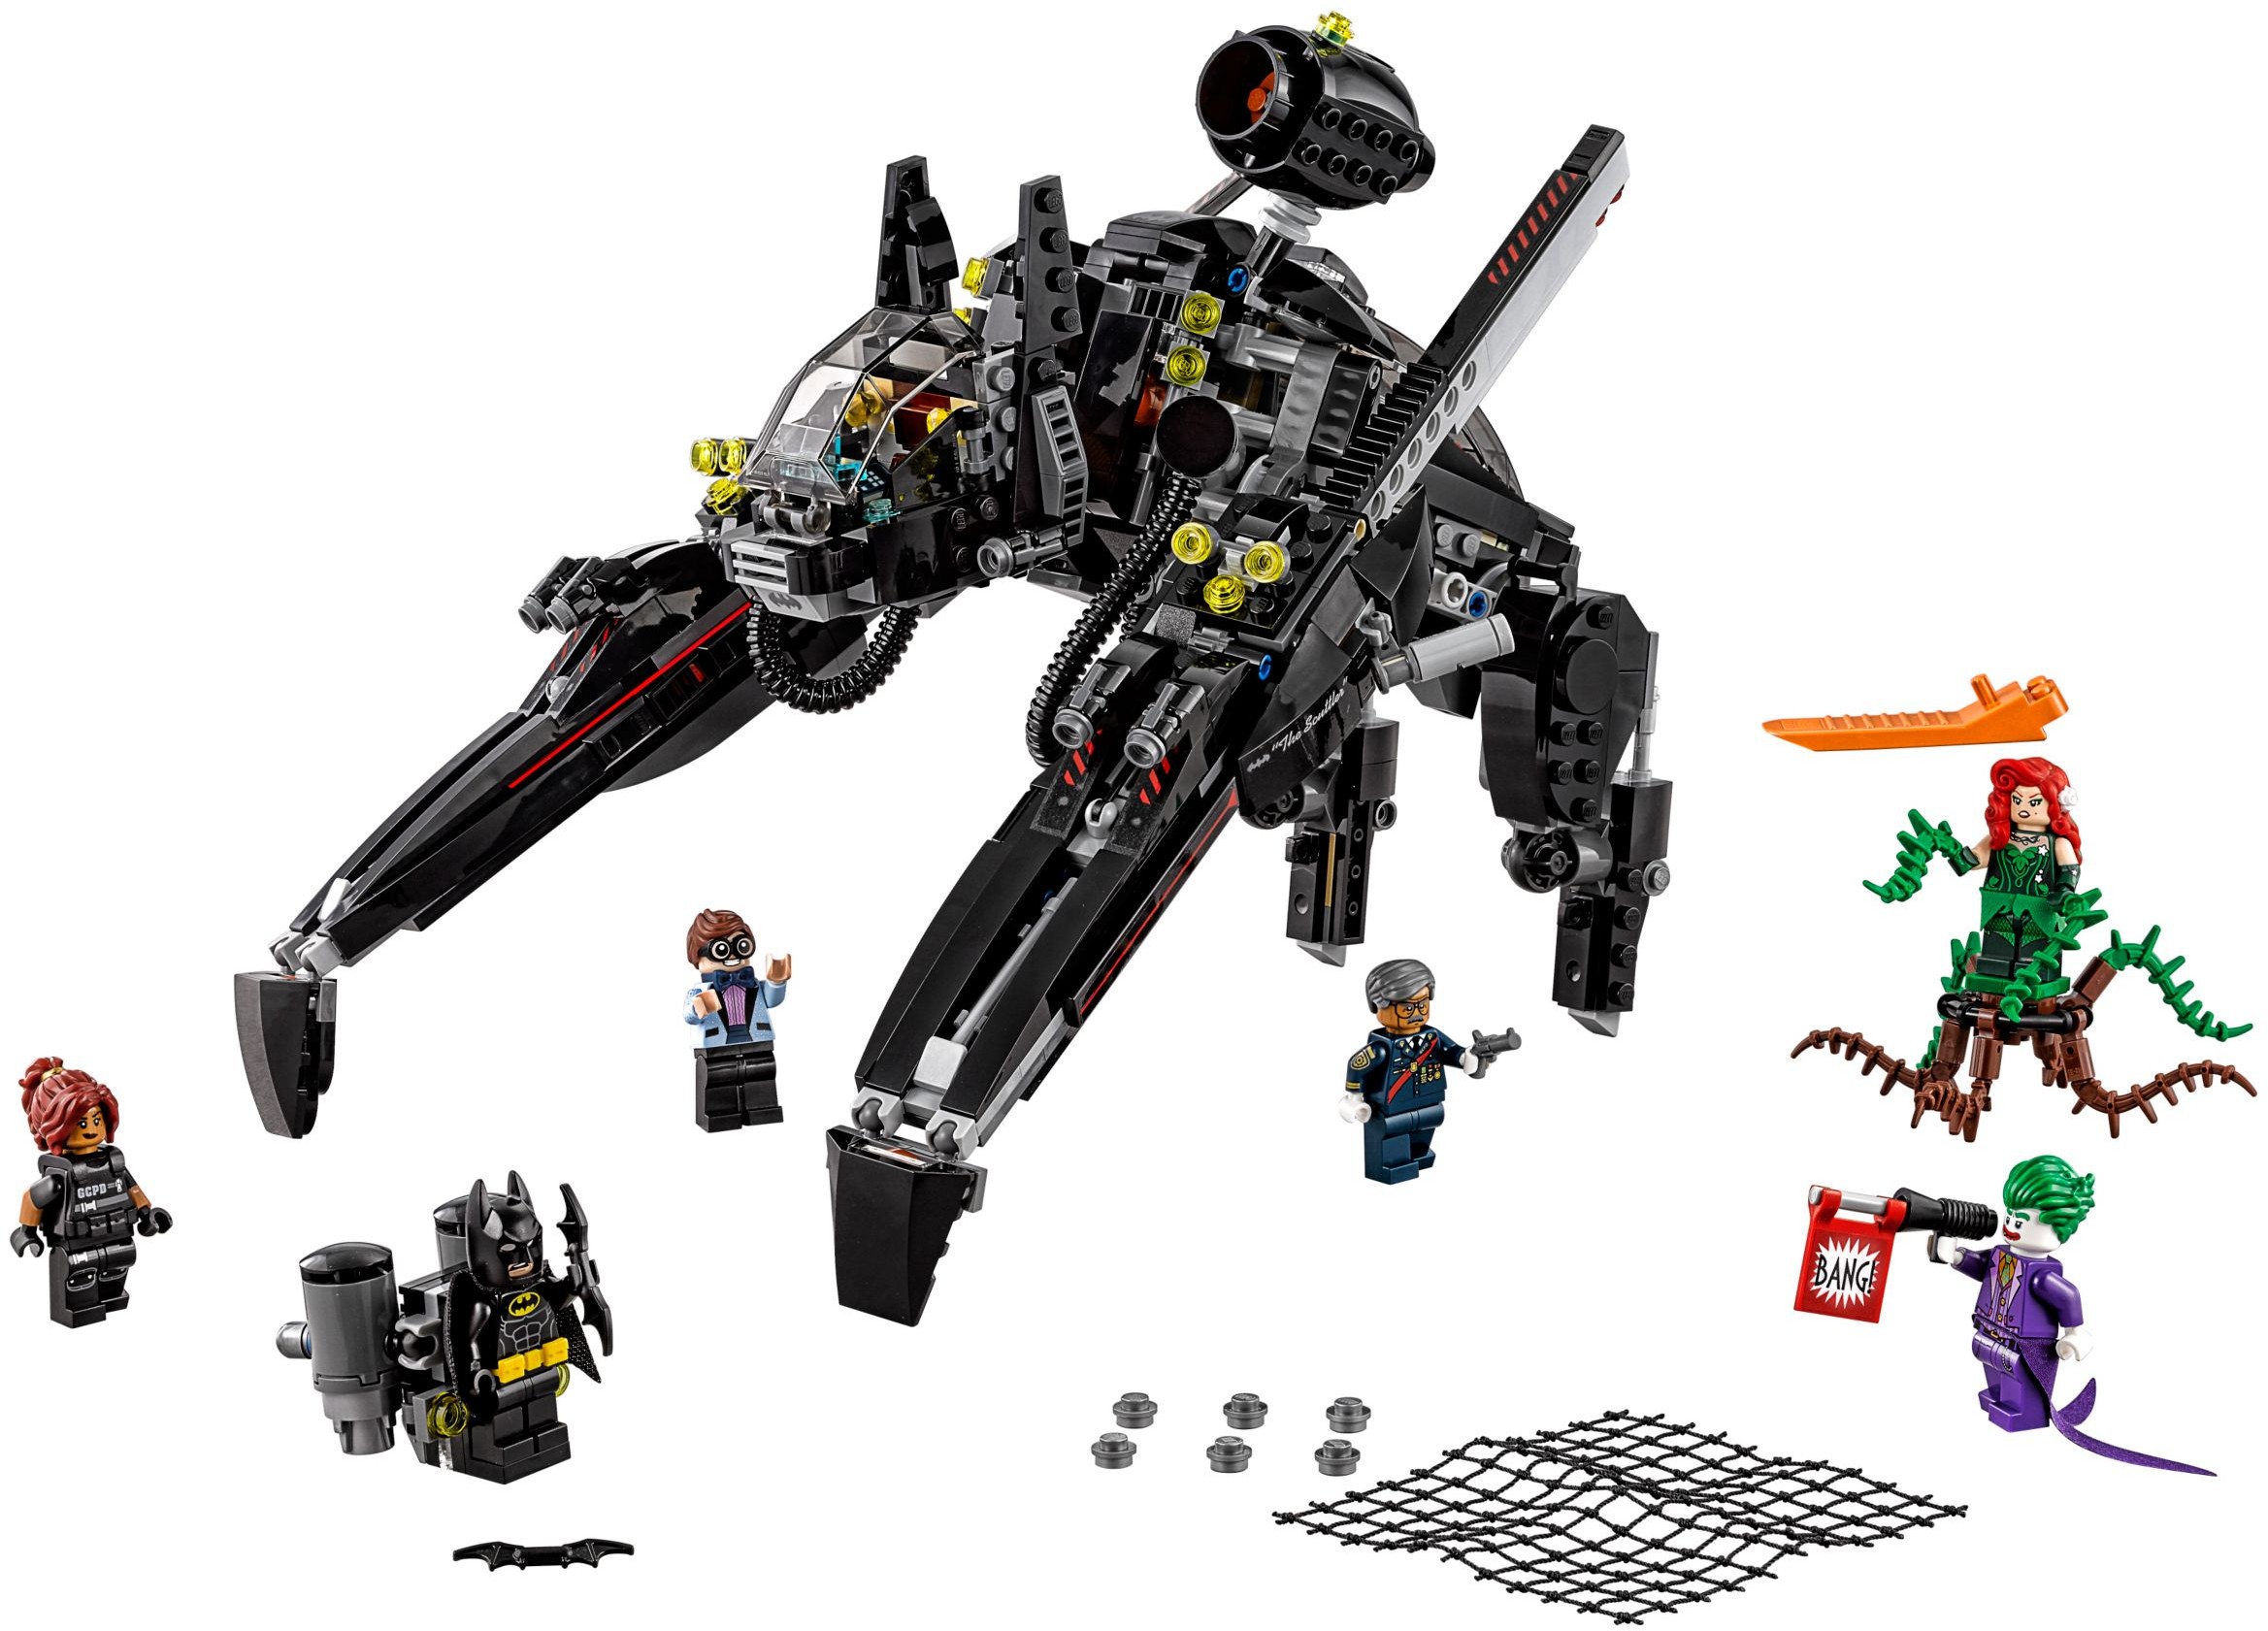 The LEGO Batman Movie official images | Brickset: LEGO set ...